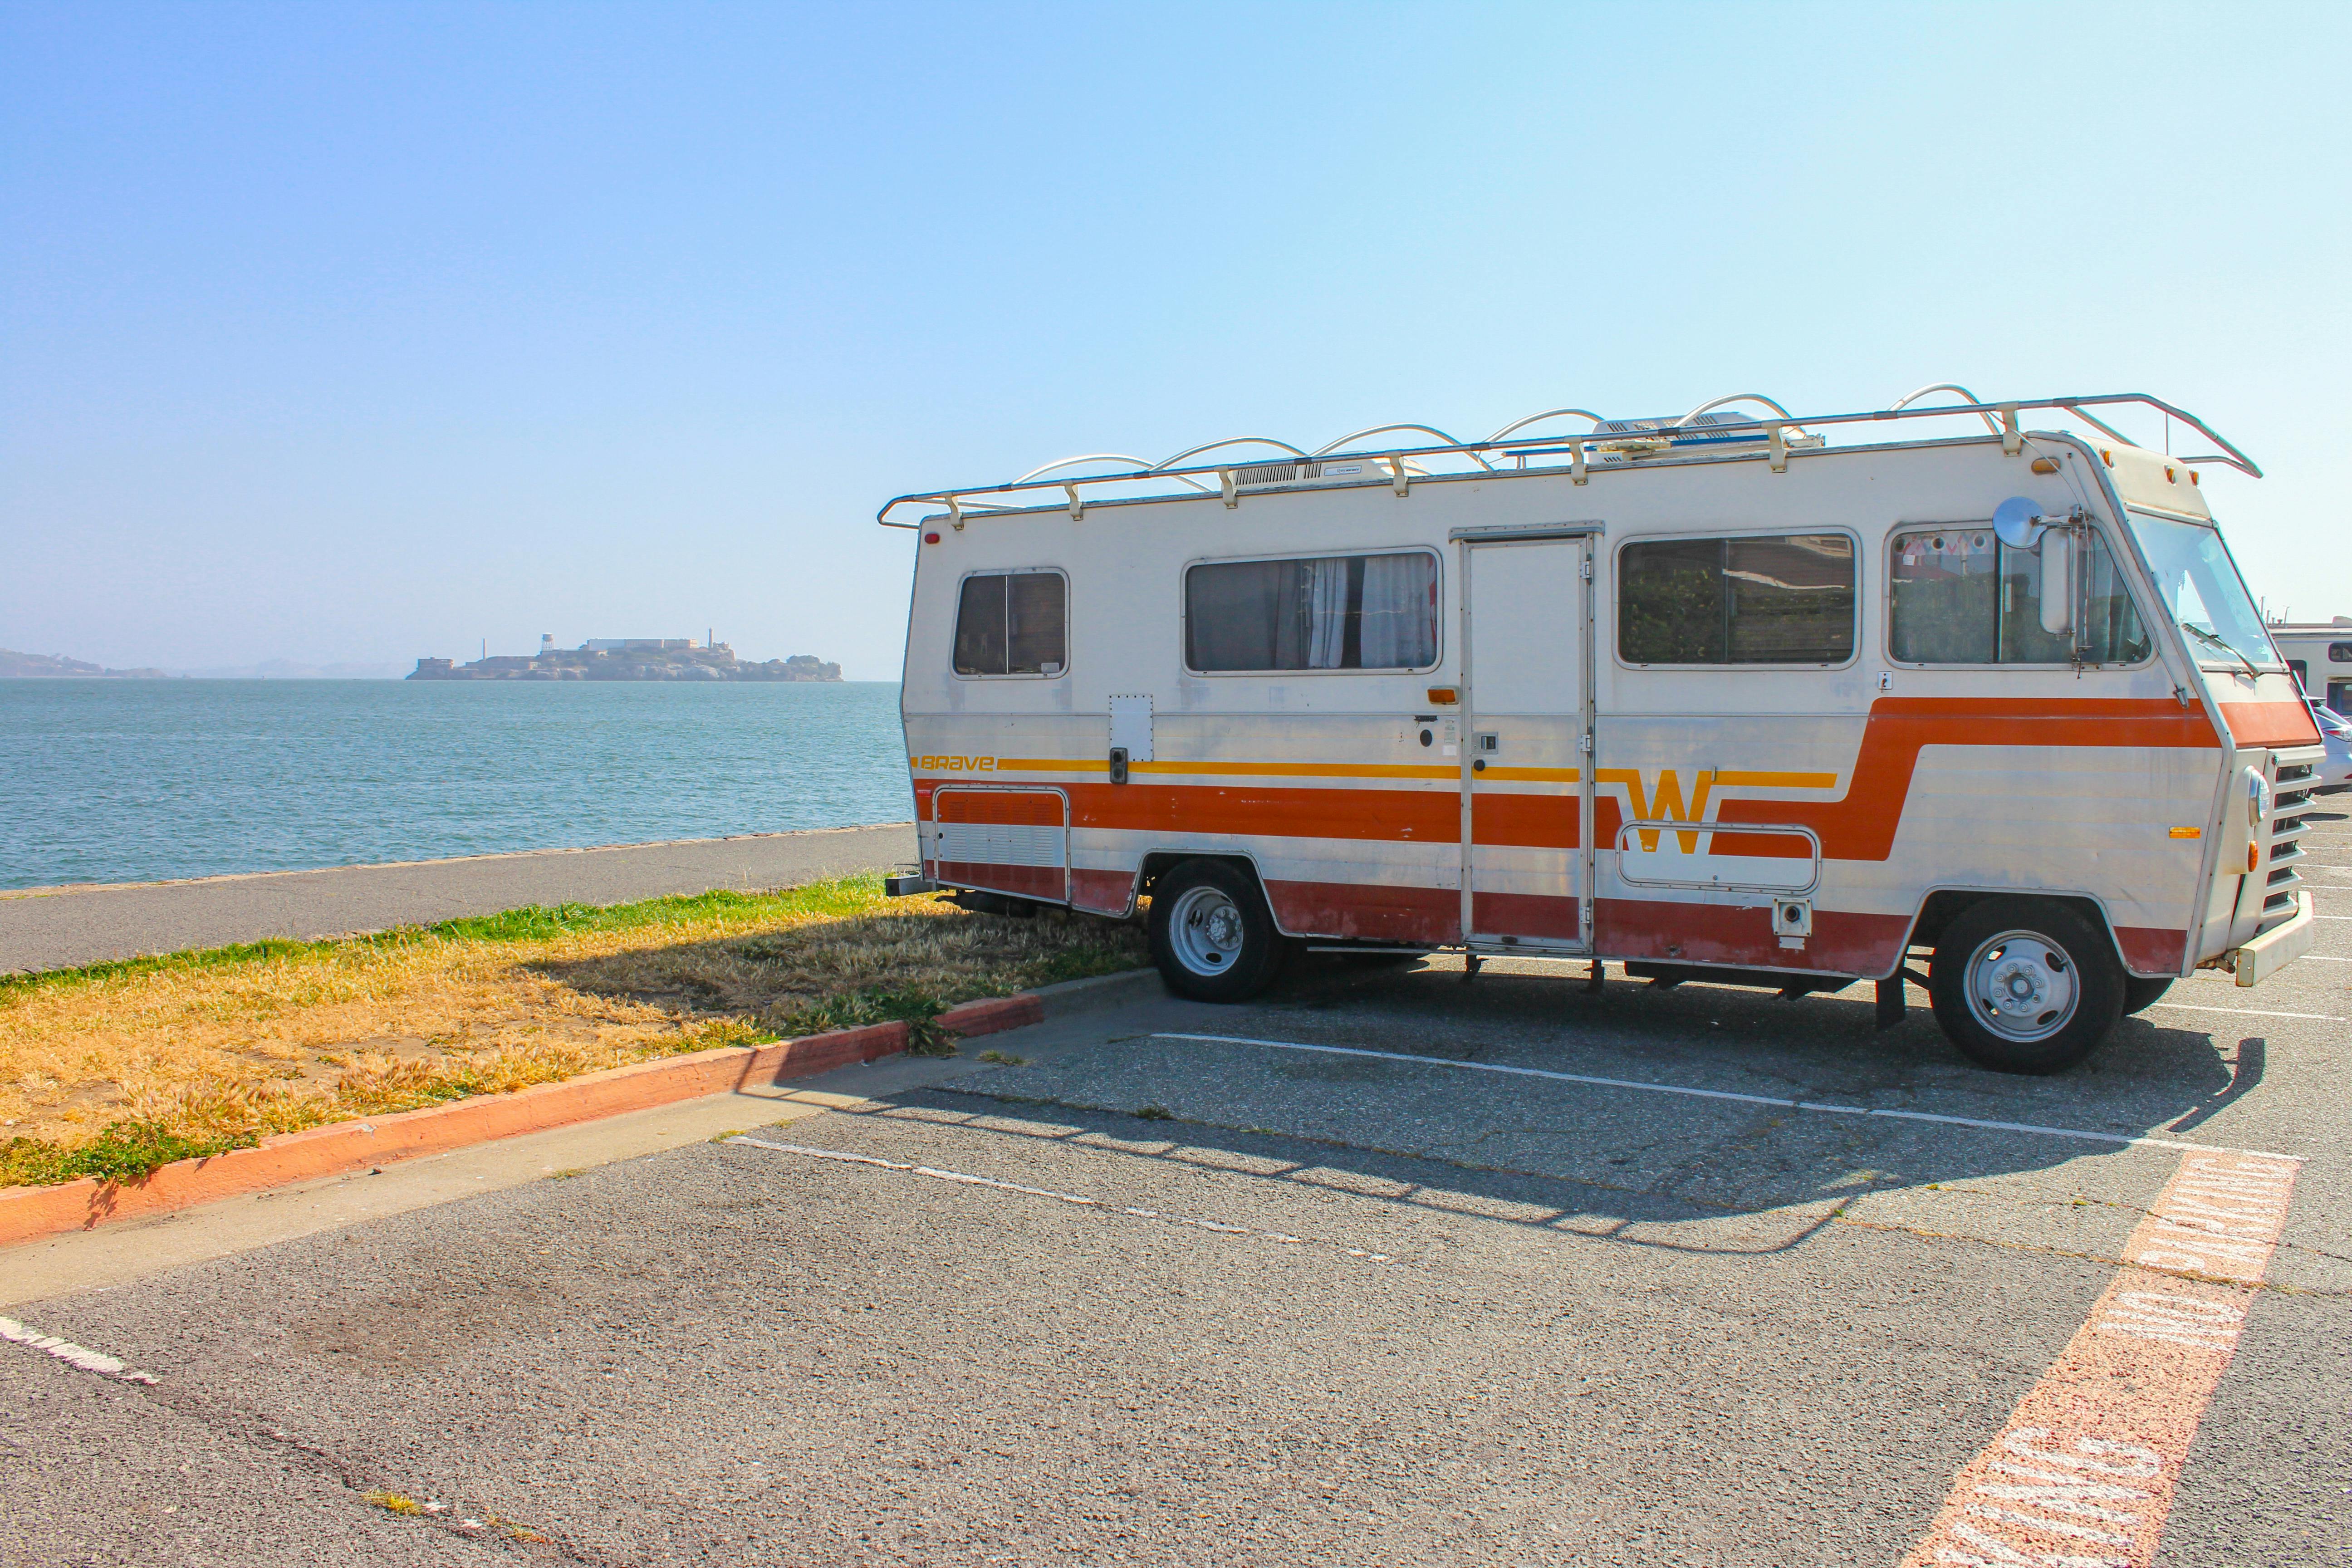 Free Trailer Van parked alongside Ocean Stock Photo